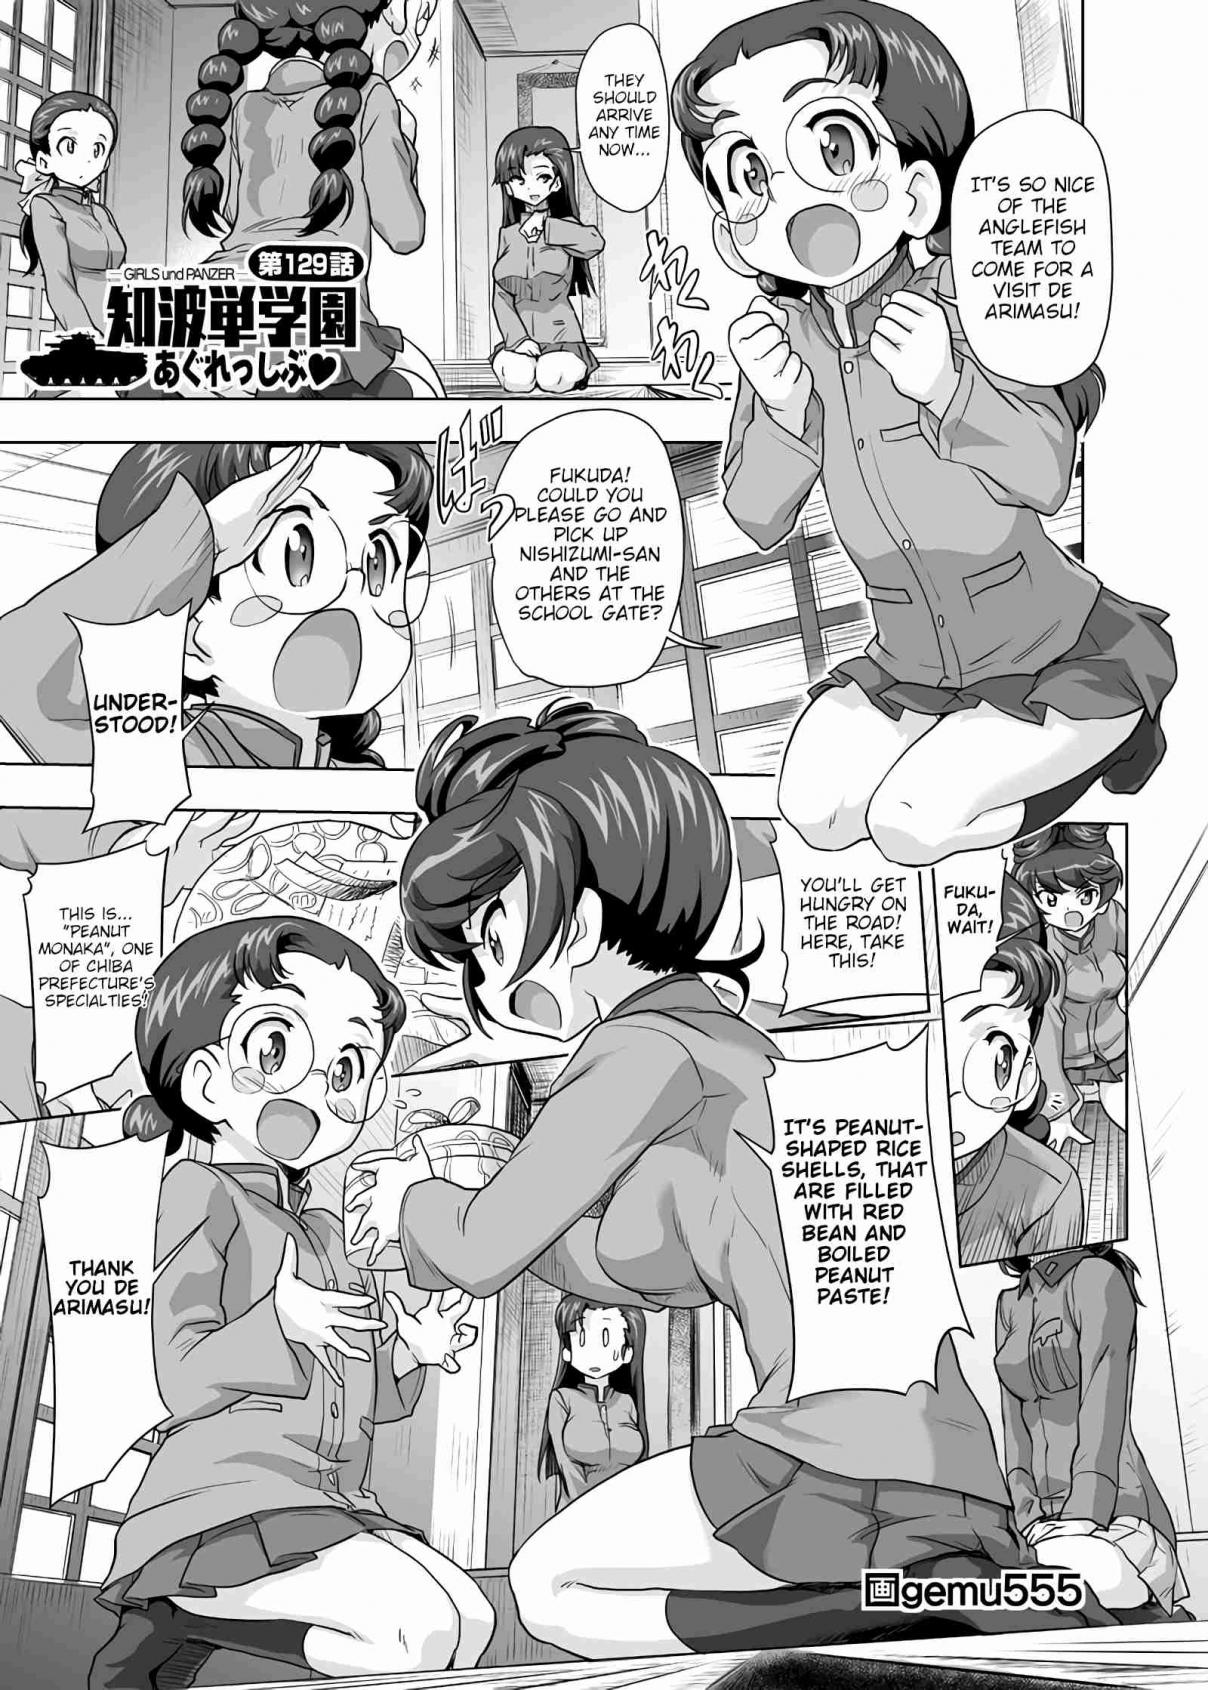 Girls und Panzer Chi HaTan Academy Aggressive (Doujinshi) Vol. 1 Ch. 129